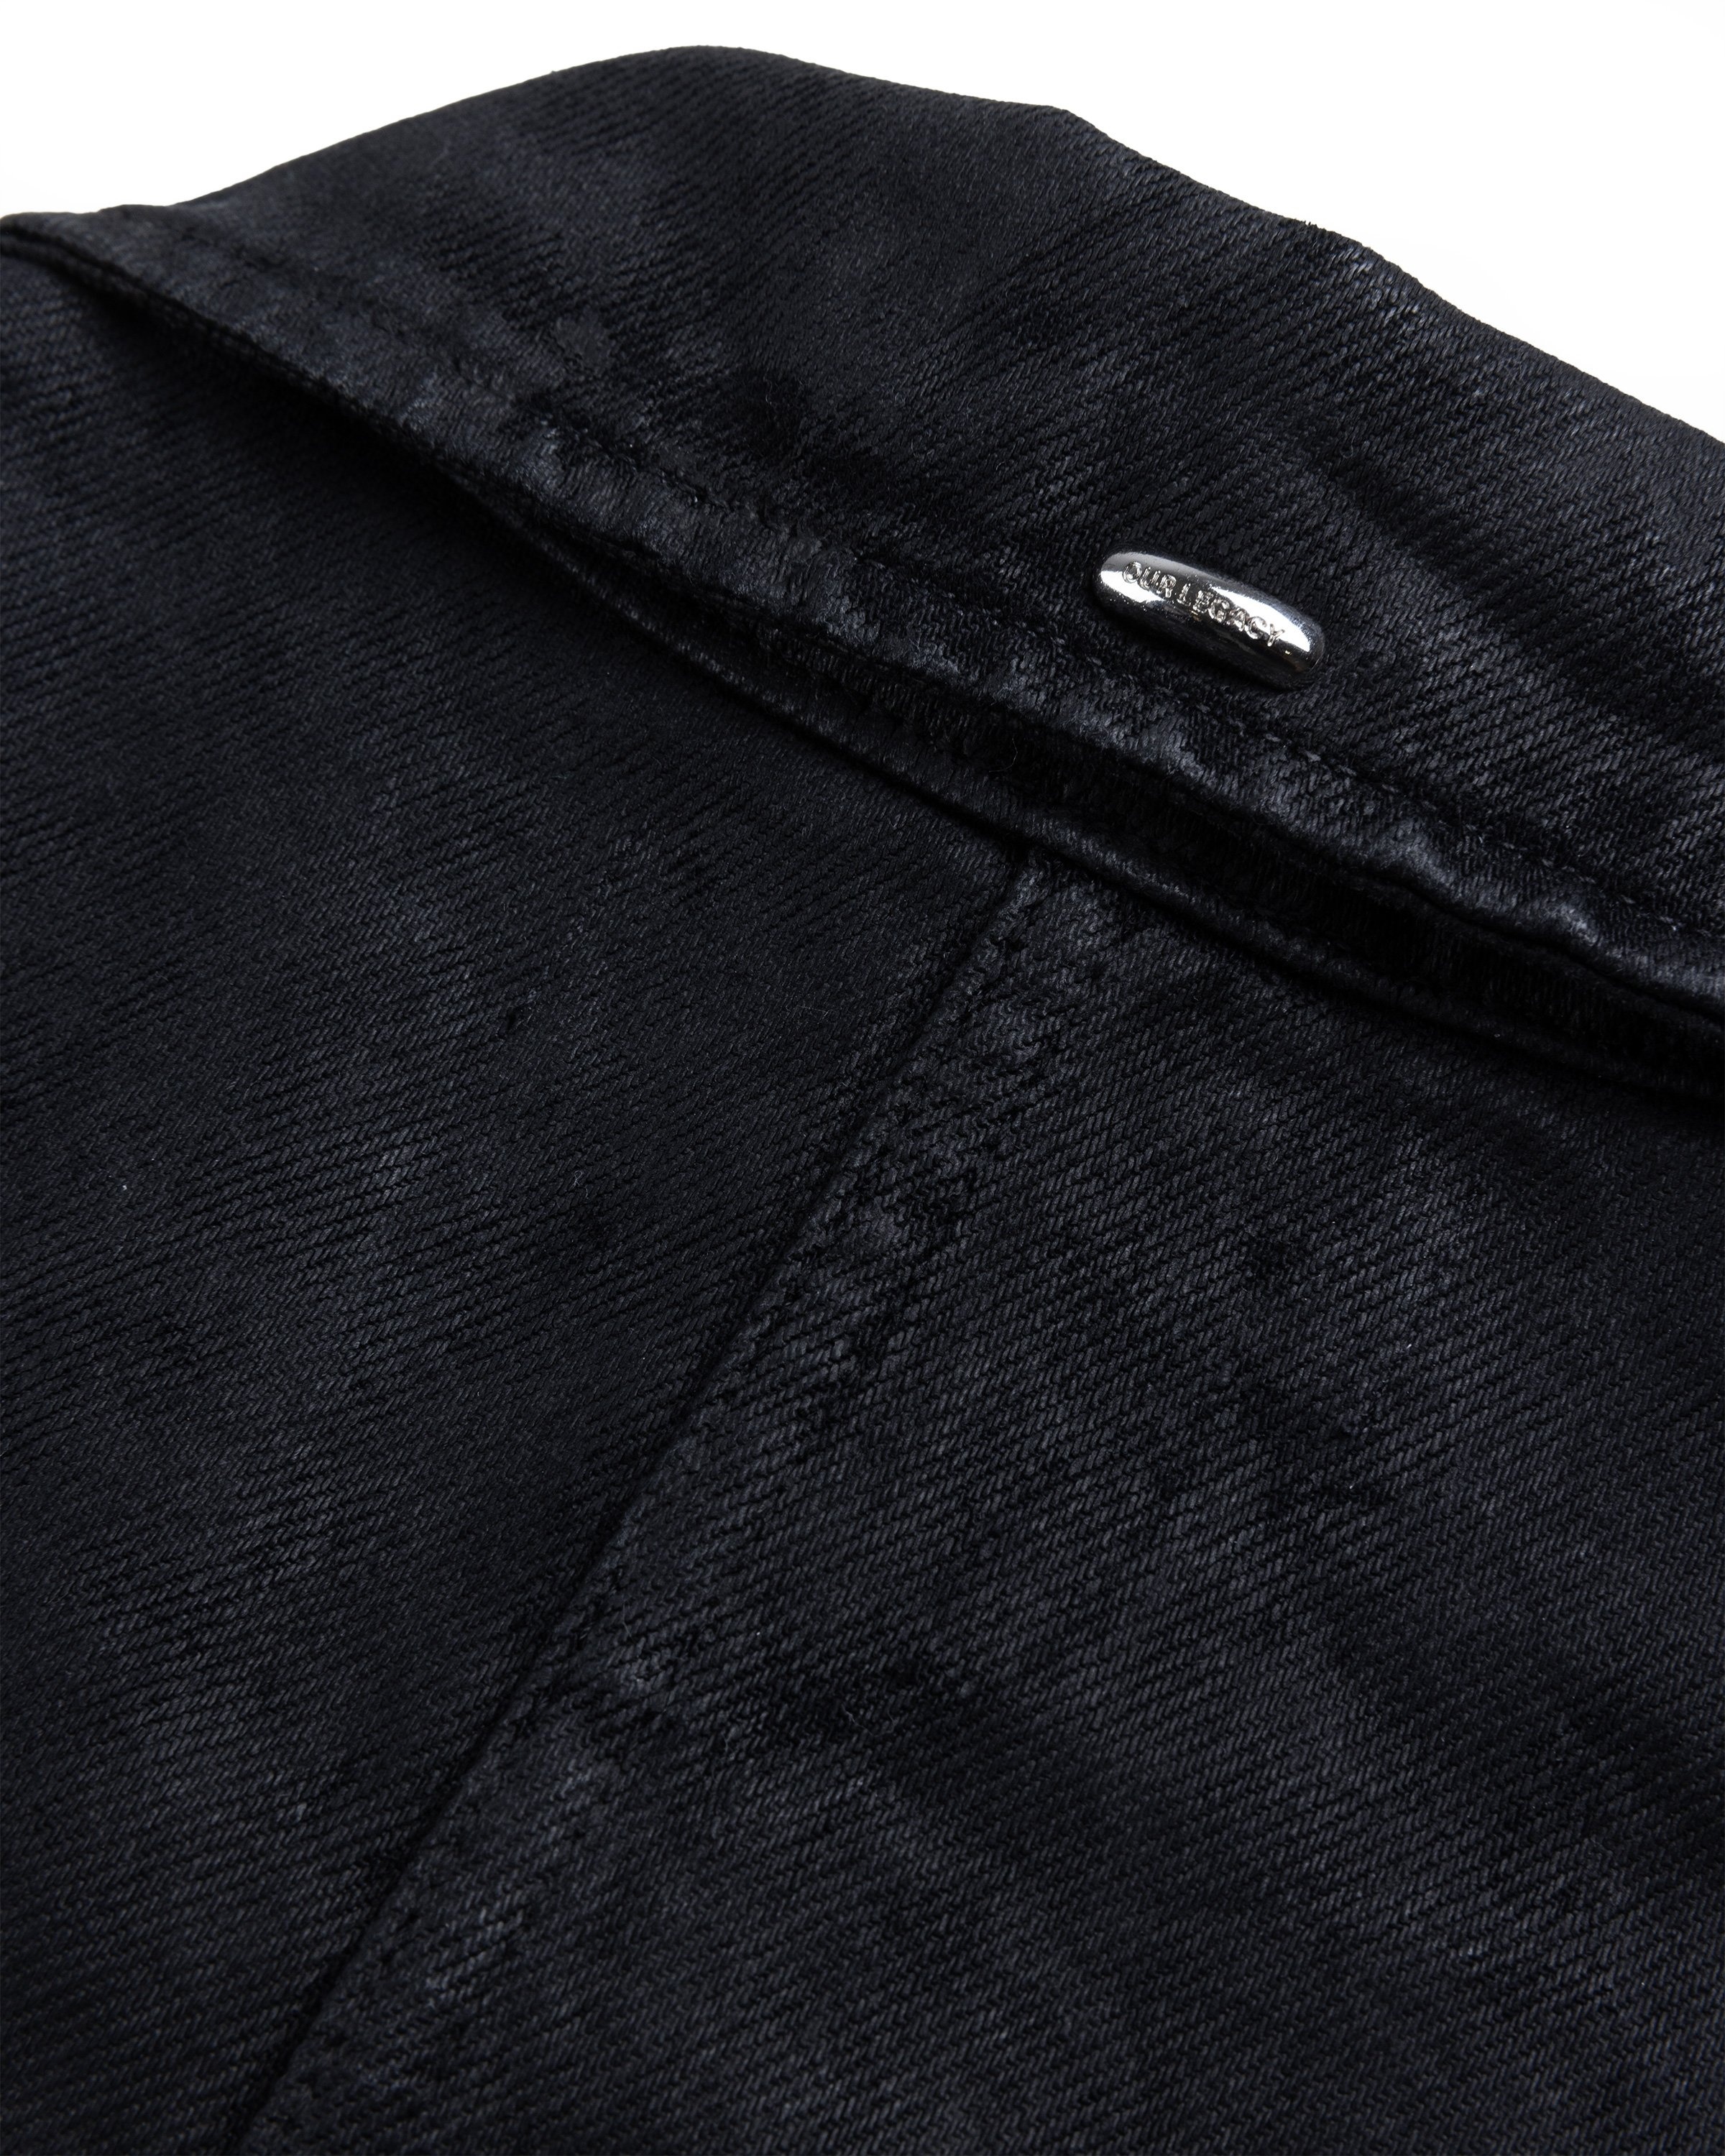 Our Legacy – Rebirth Jacket Waxed Black Denim - Outerwear - Black - Image 5